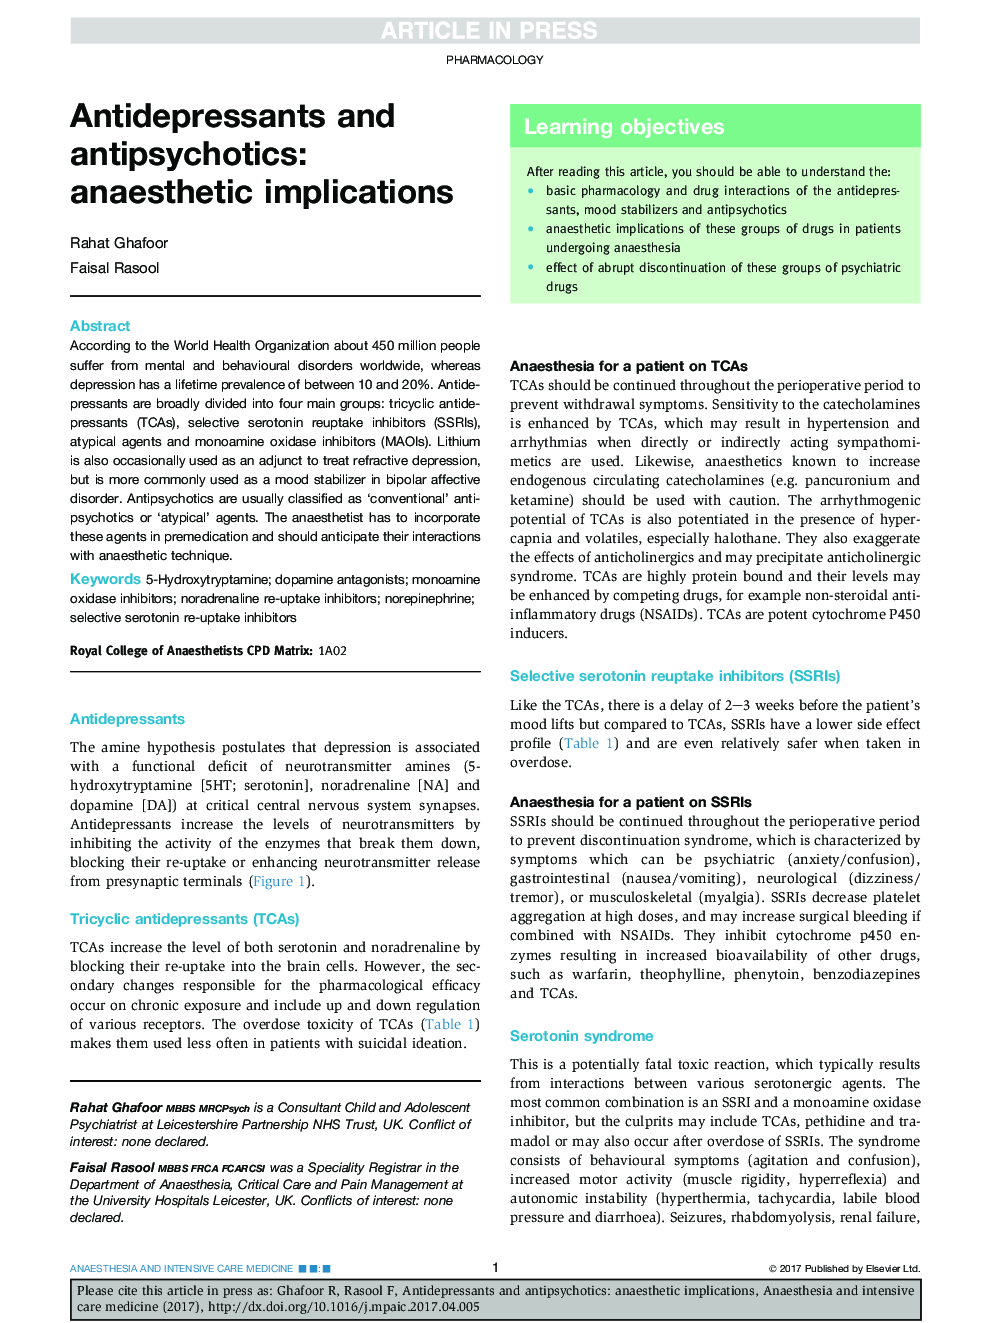 Antidepressants and antipsychotics: anaesthetic implications